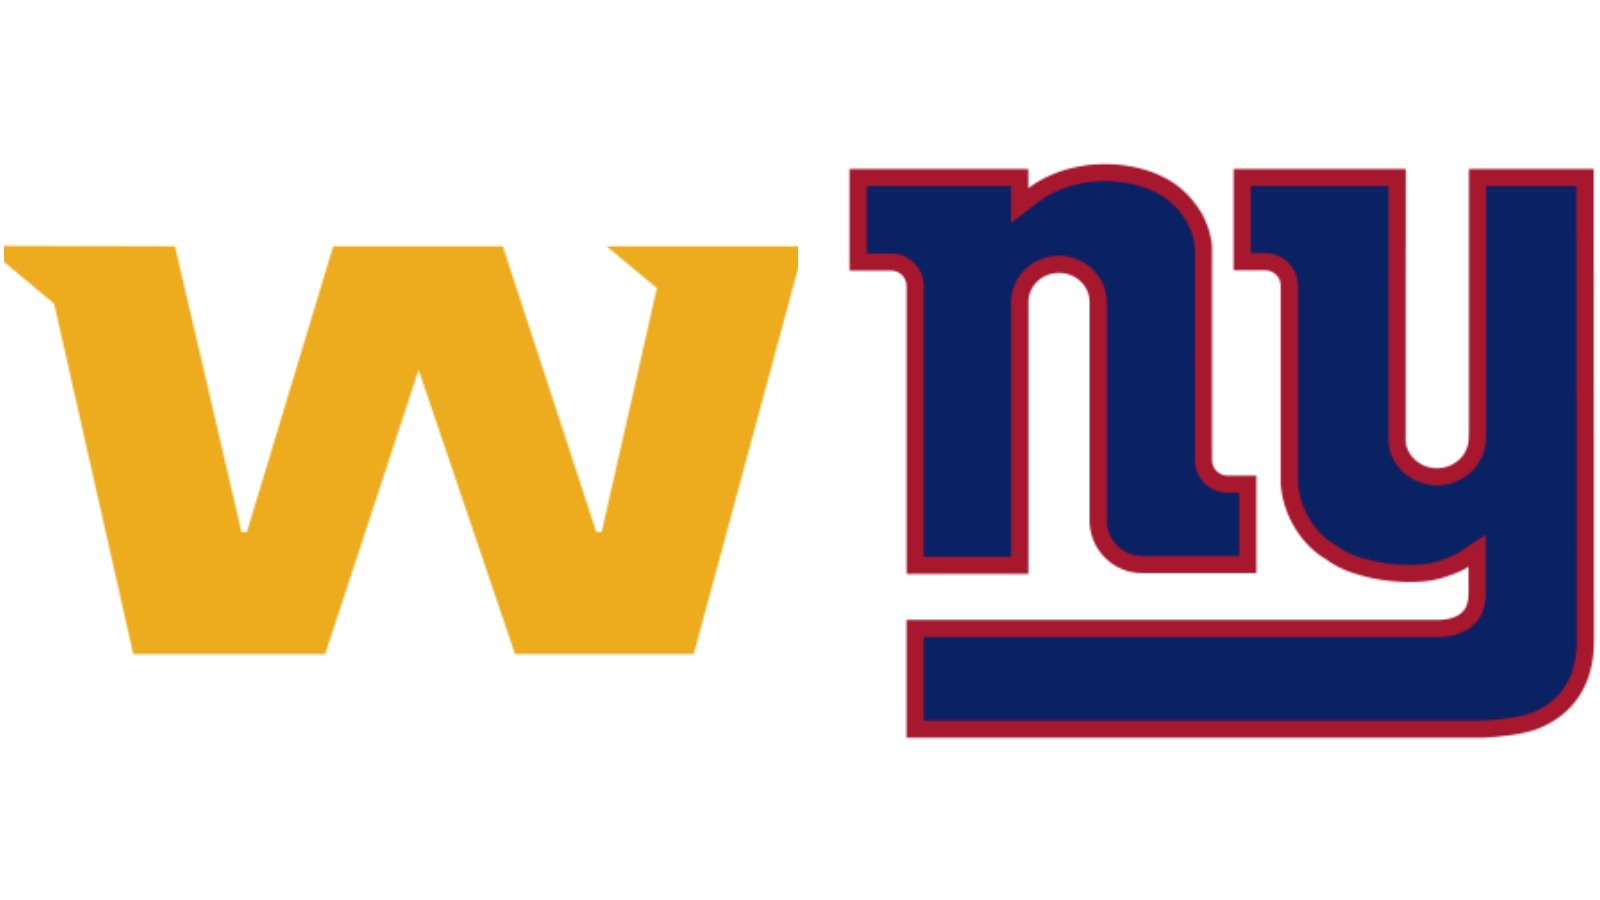 Washington Football Team vs New York Giants